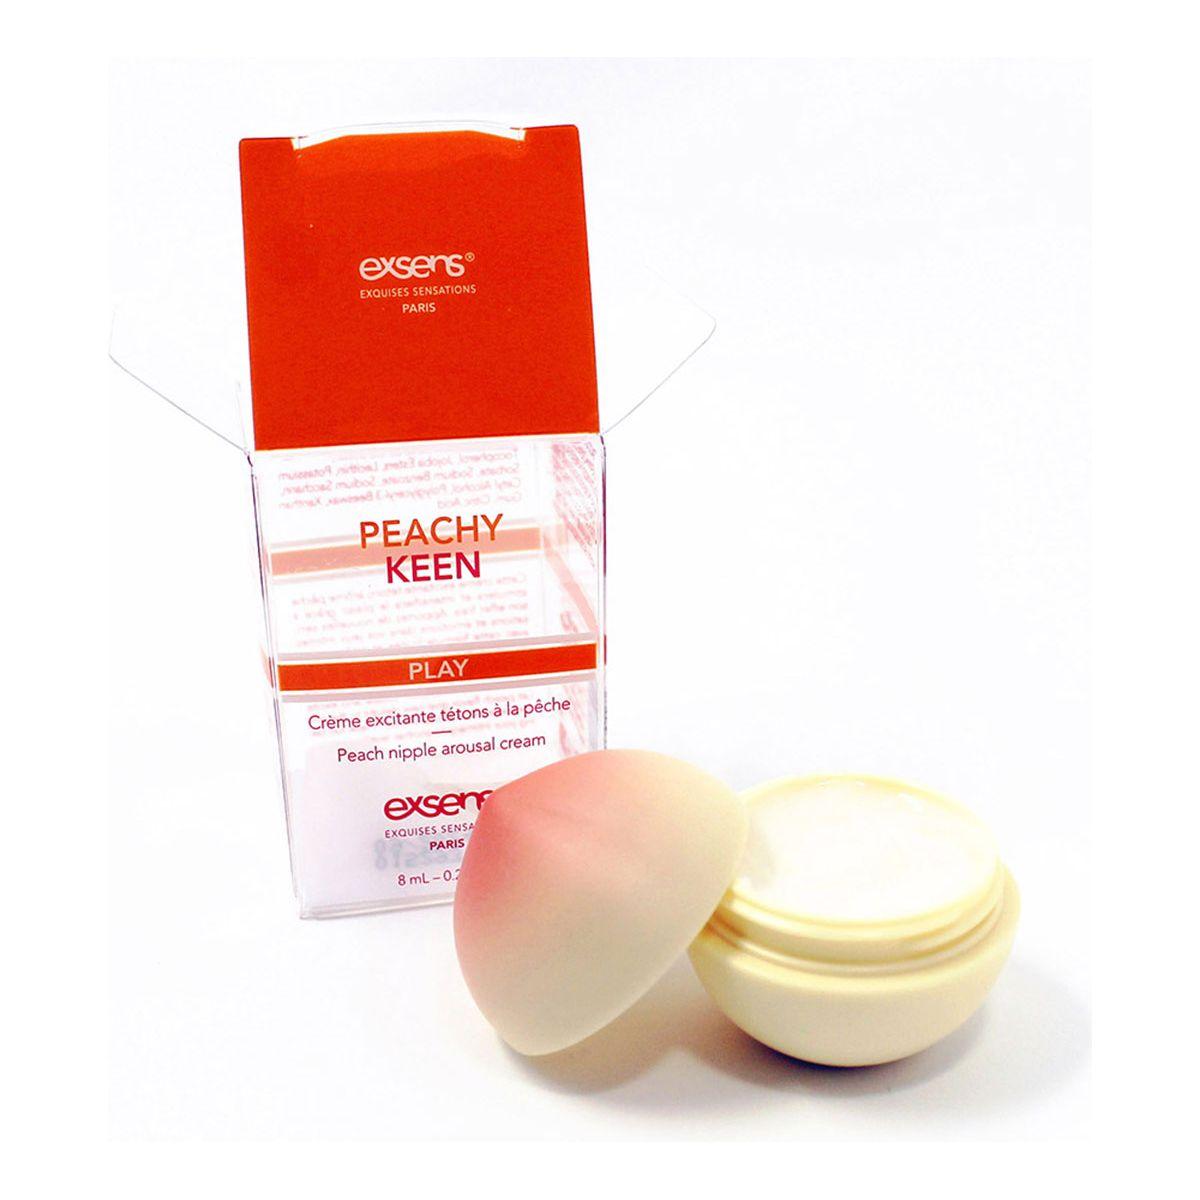 Exsens Nipple Arousal Cream 8ml - Peachy Keen - shop enby